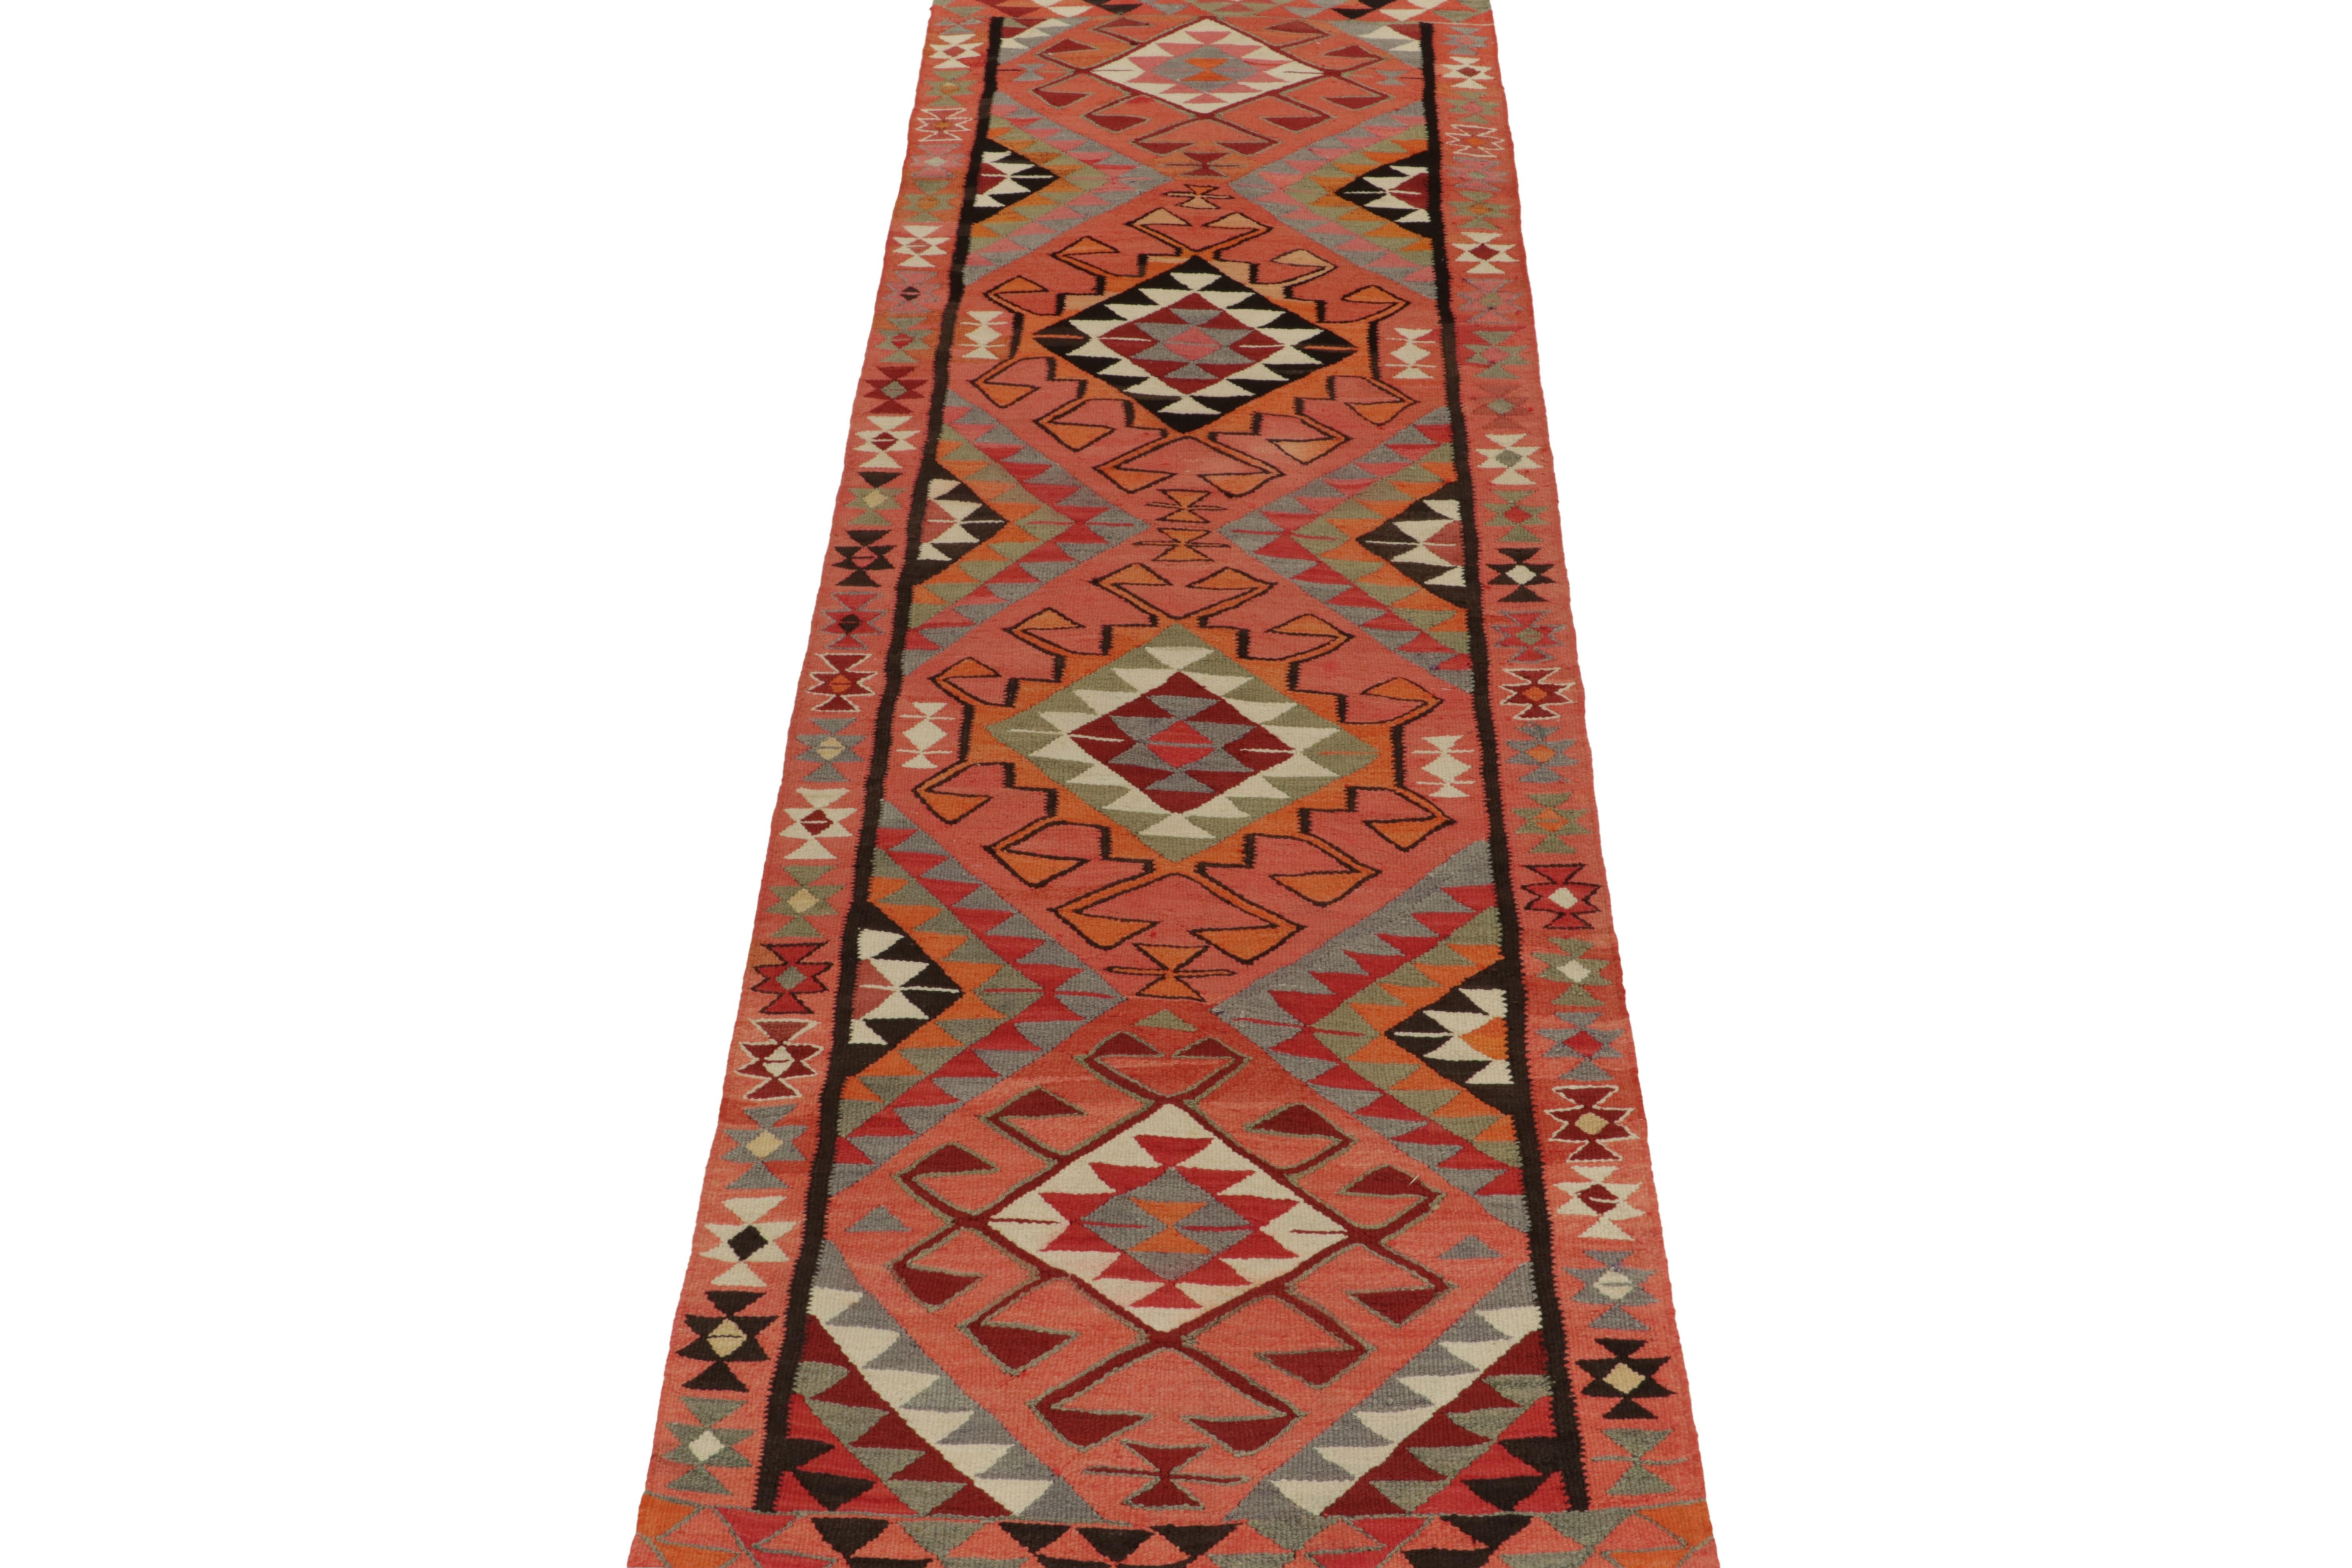 Turkish Vintage Kilim Tribal Runner in Multicolor Geometric Patterns by Rug & Kilim For Sale